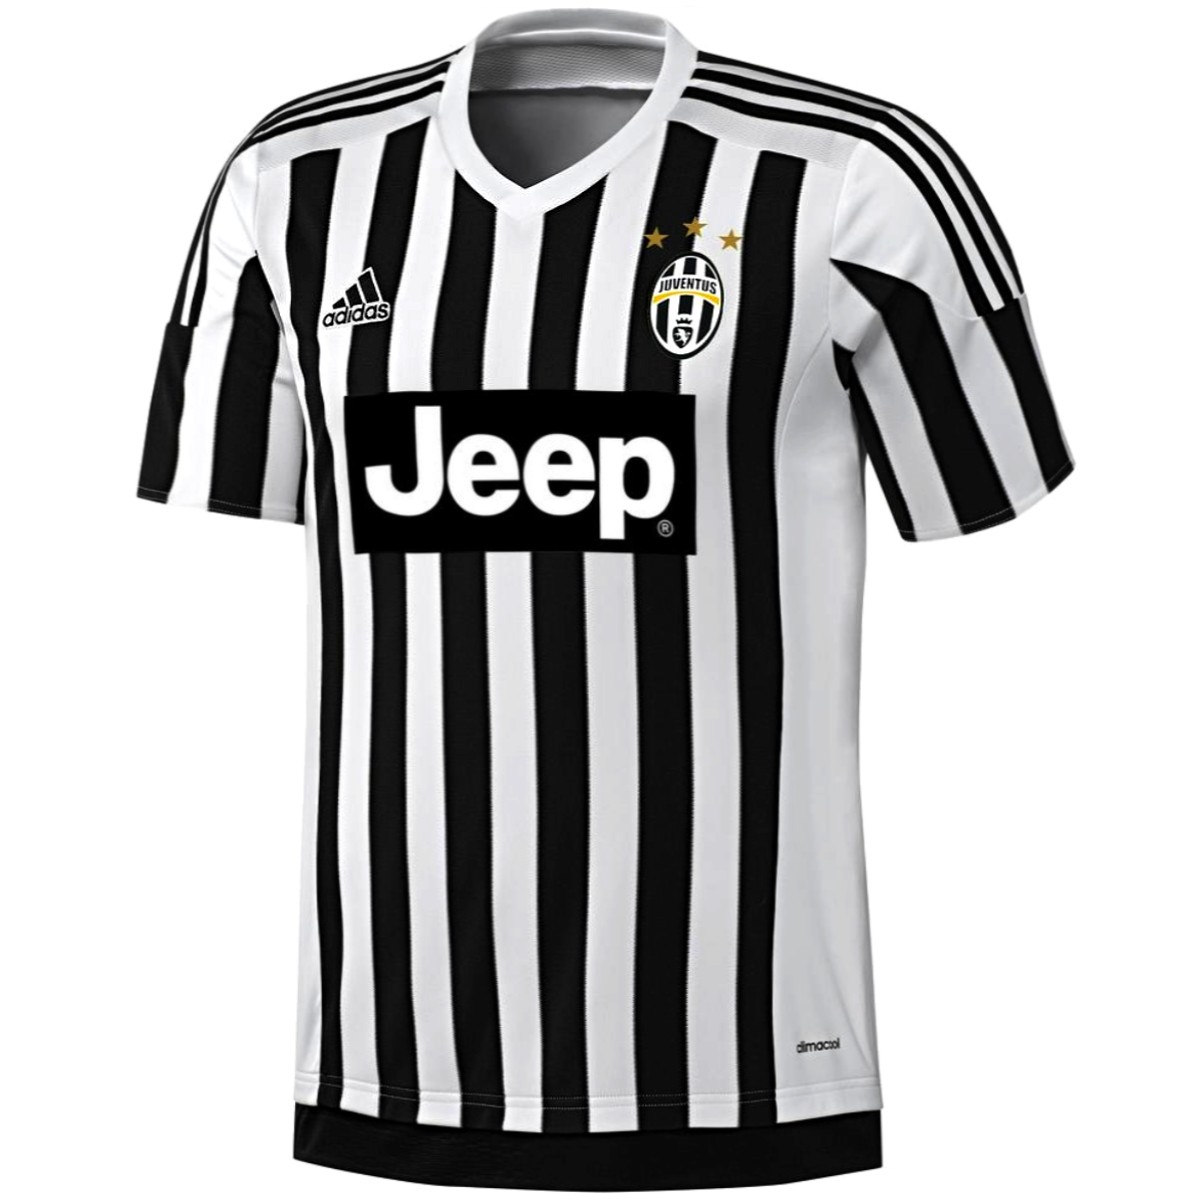 Academia Viajero Permanece FC Juventus camiseta de fútbol Home 2015/16 - Adidas - SportingPlus -  Passion for Sport